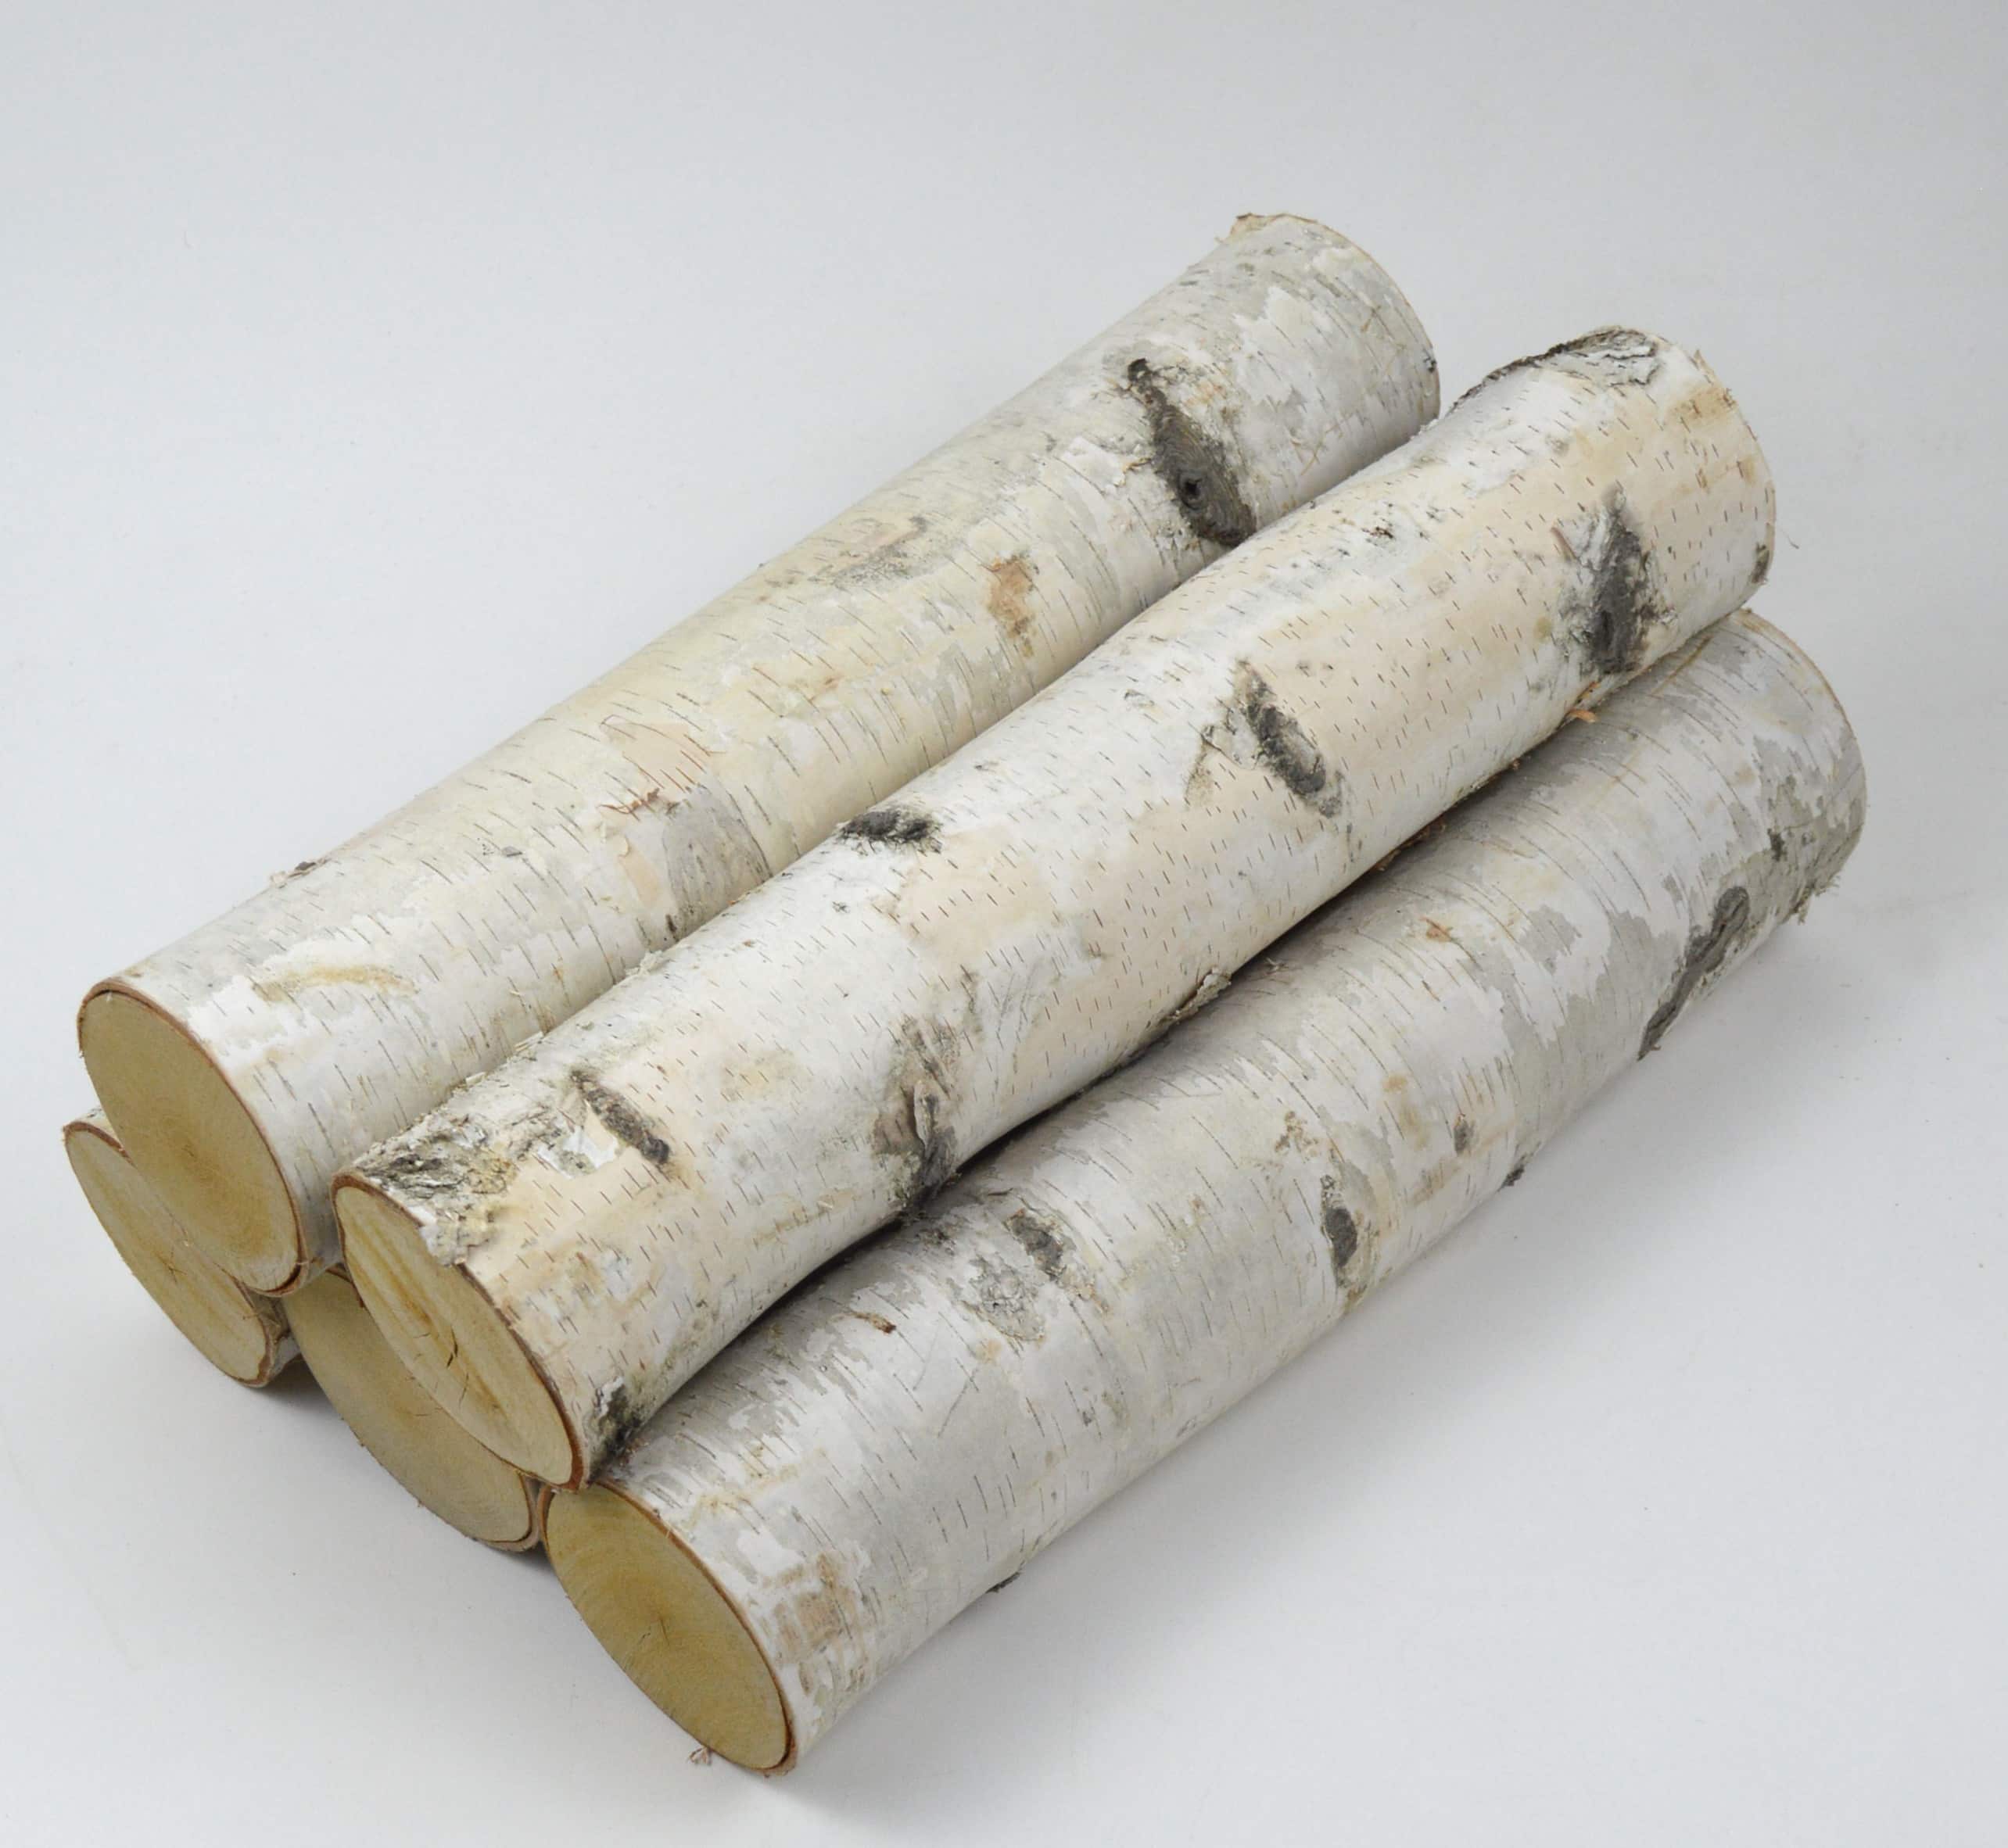 Wilson White Birch Fireplace XL Long Log, 23-24 L x 5-6 D (1 Log)